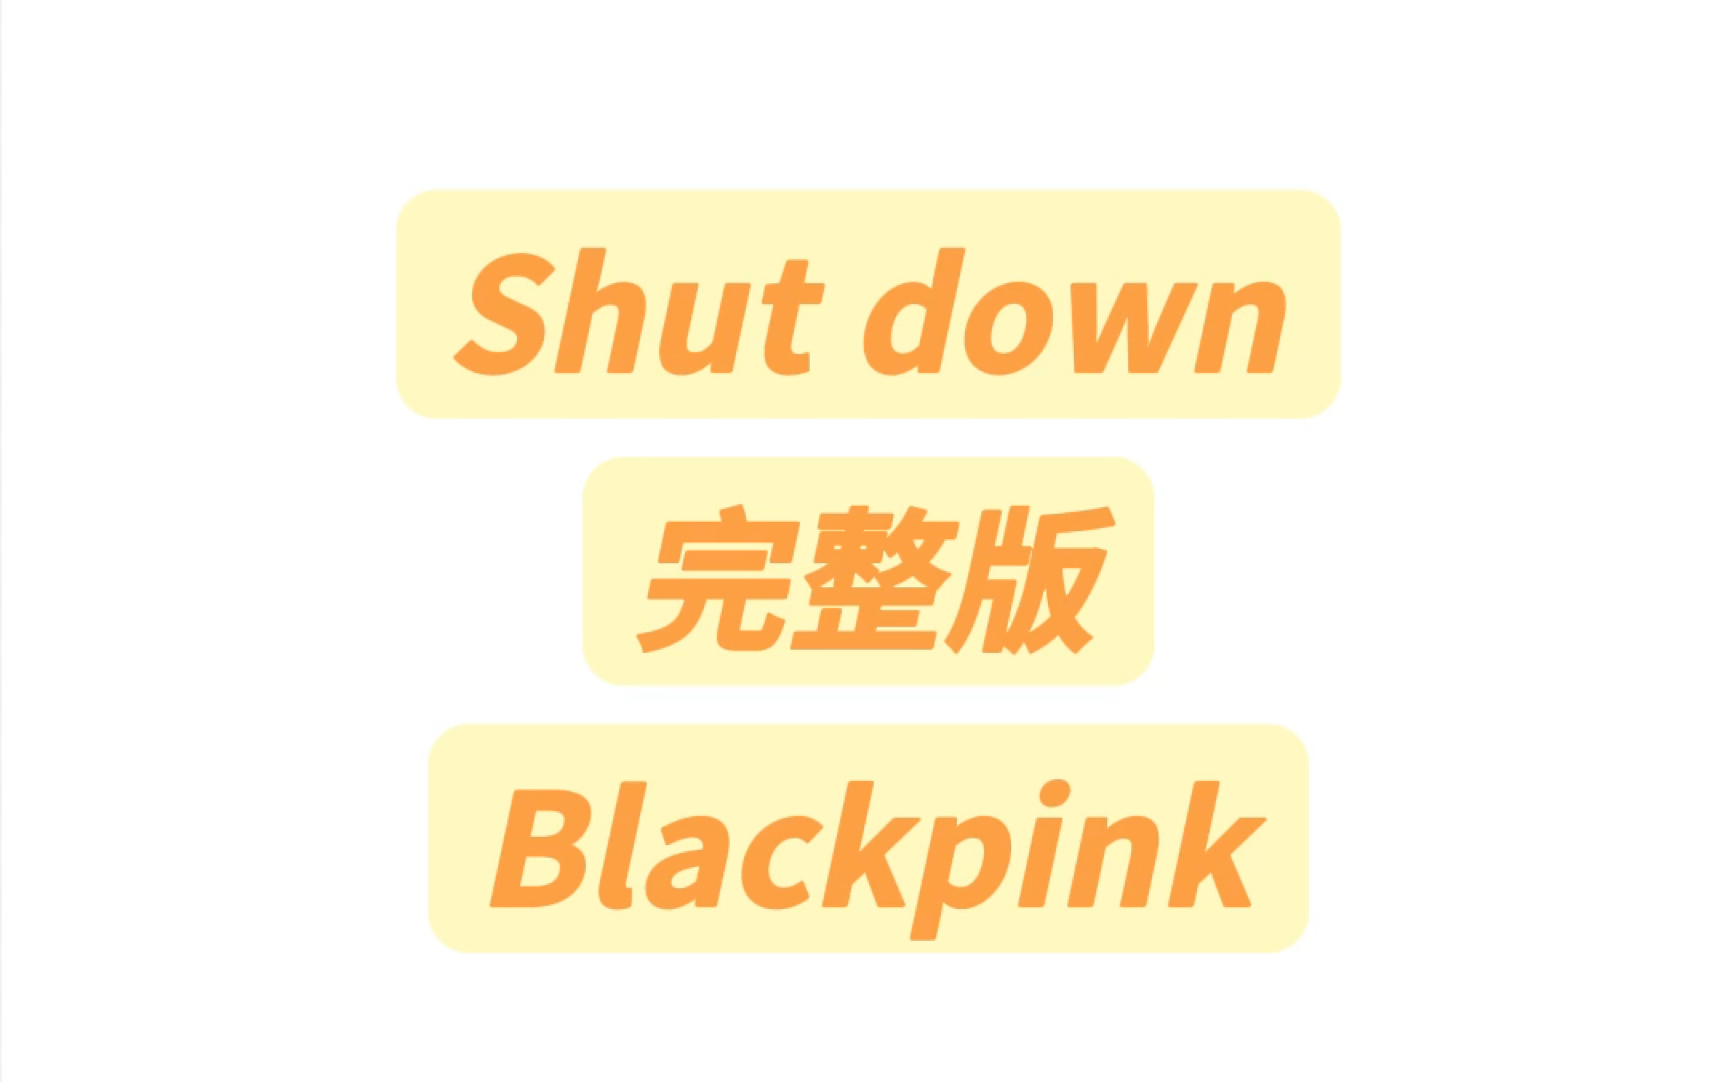 Shut down完整版音译教学#blackpink #shutdown #blackpink世界巡演